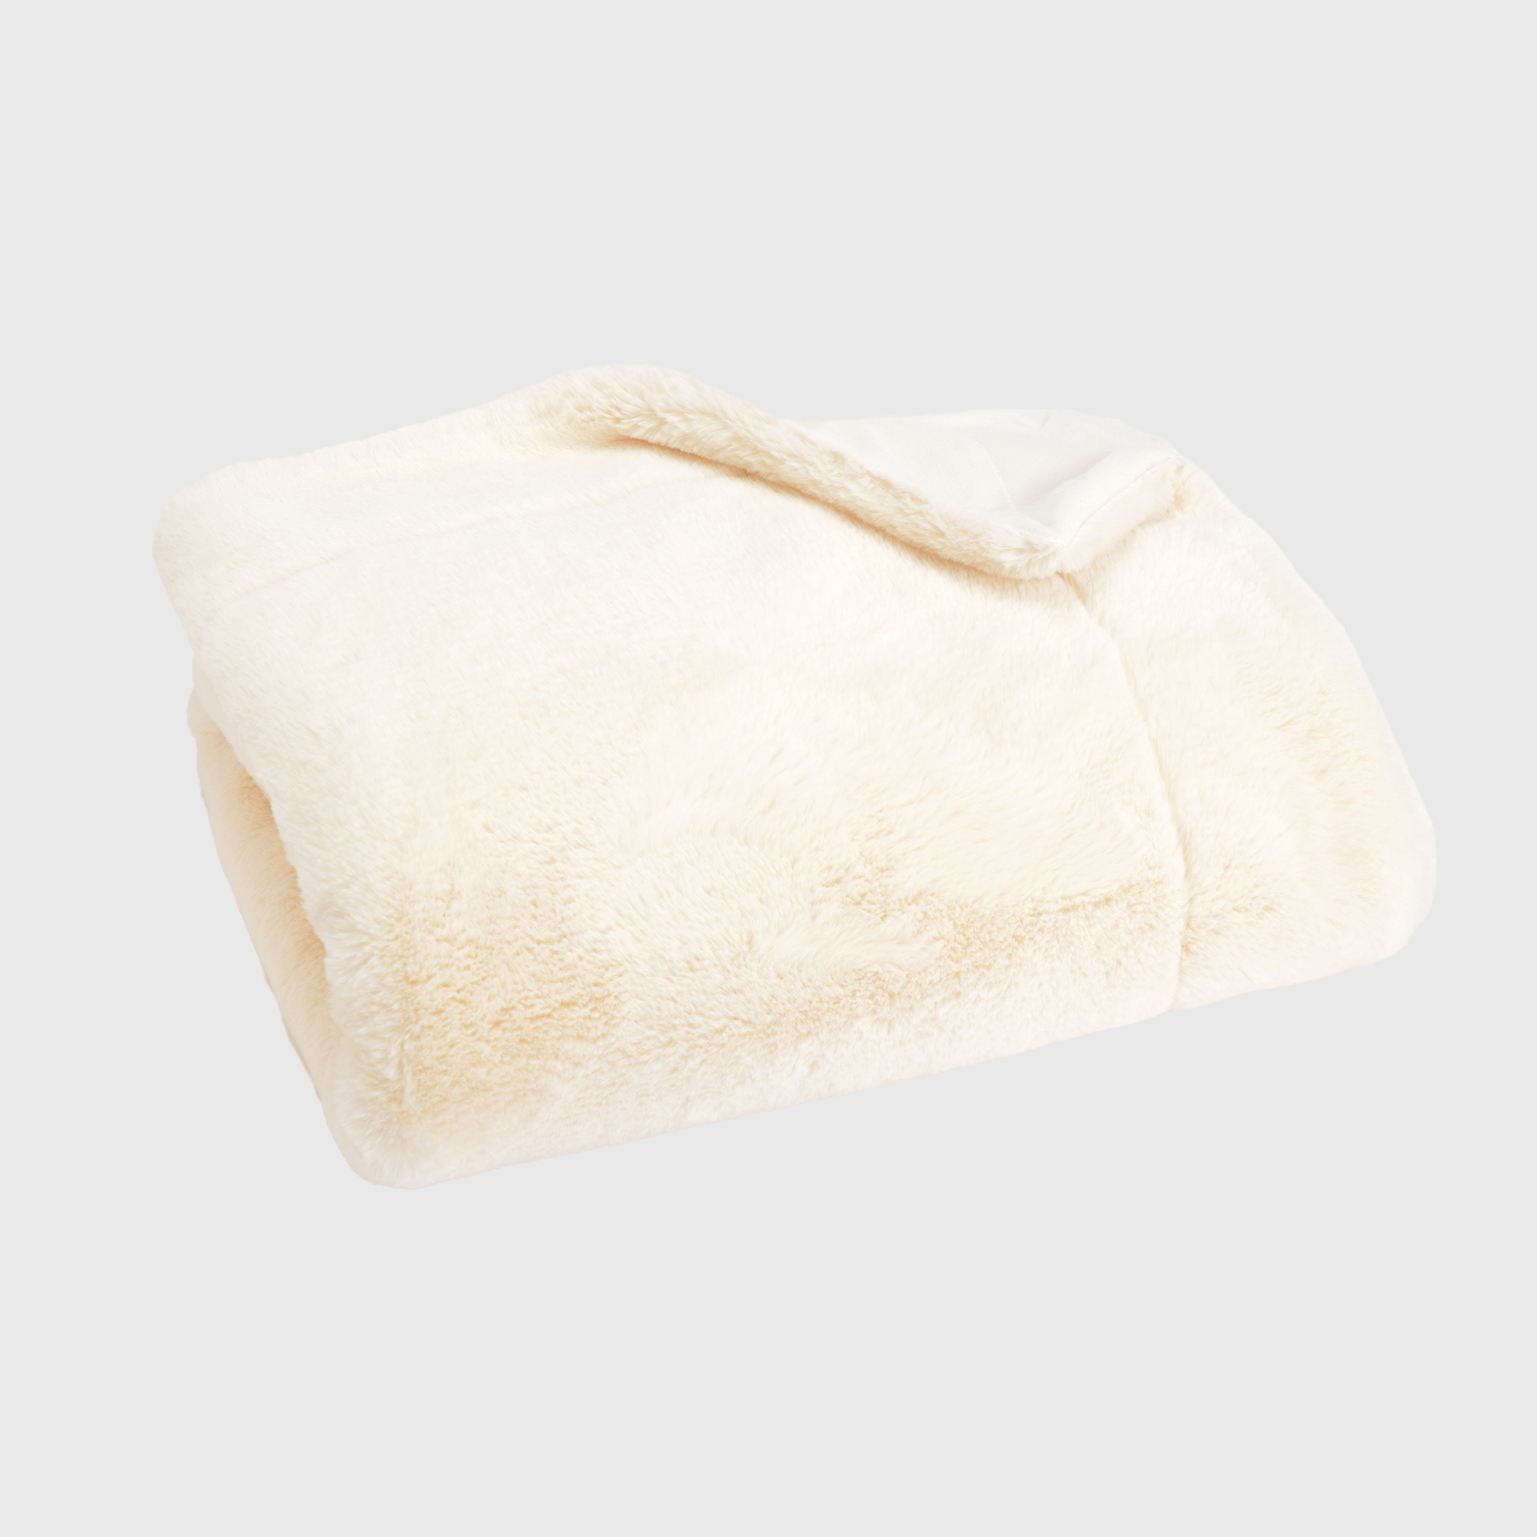 Microsensoft fleece blanket 150x180cm